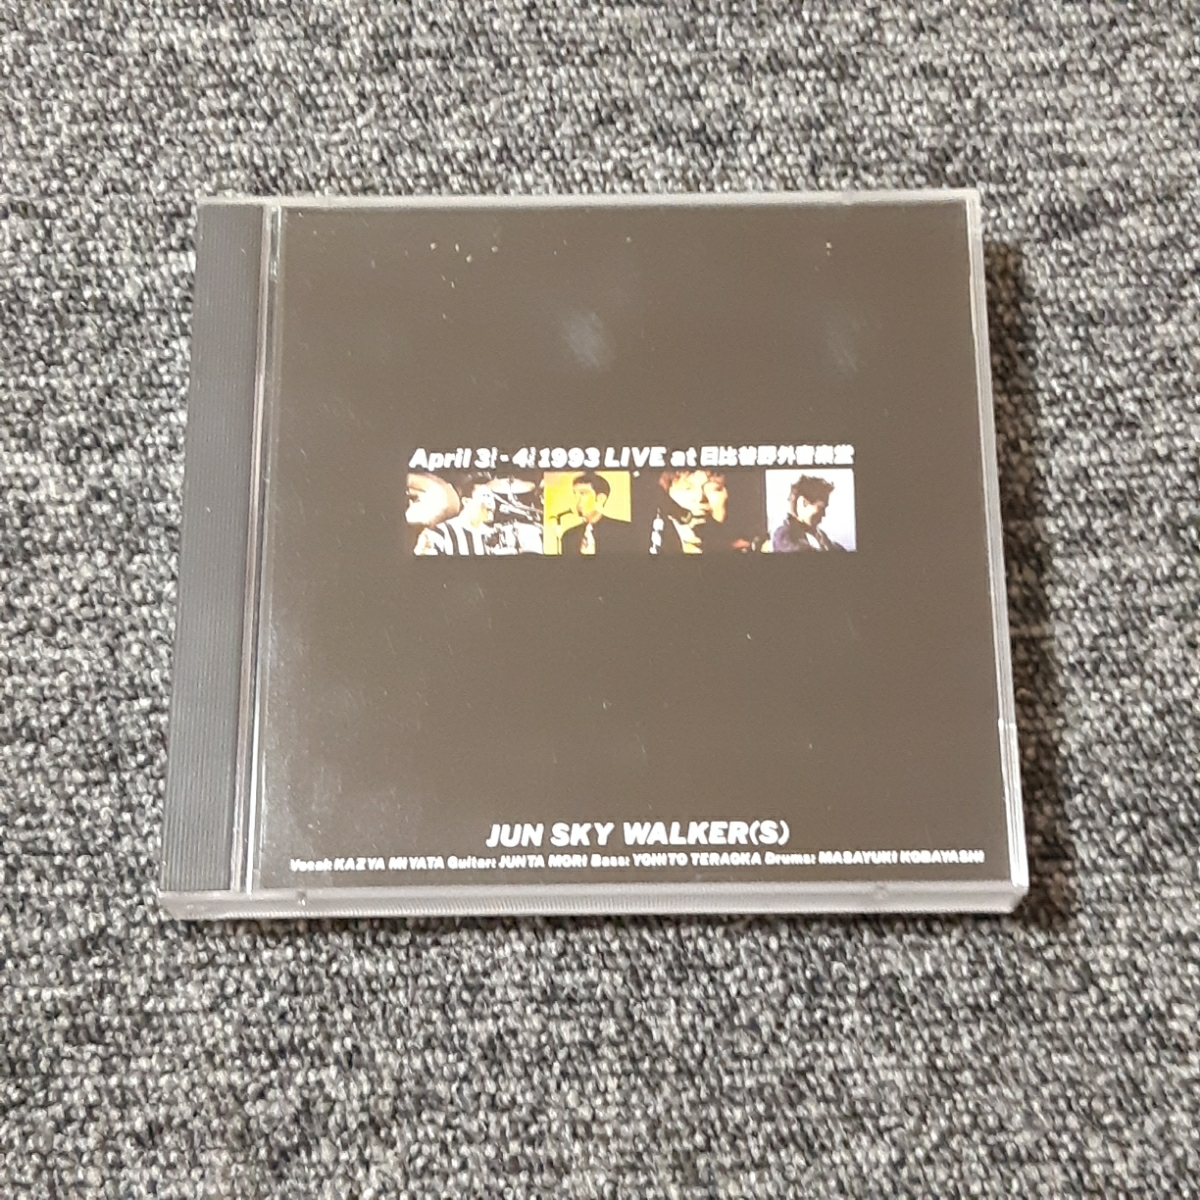 JUN SKY WALKER(S) APRIL 3(SAT)-4(SUN) 1993 LIVE AT 日比谷野外音楽堂 帯なし 2CD_画像1